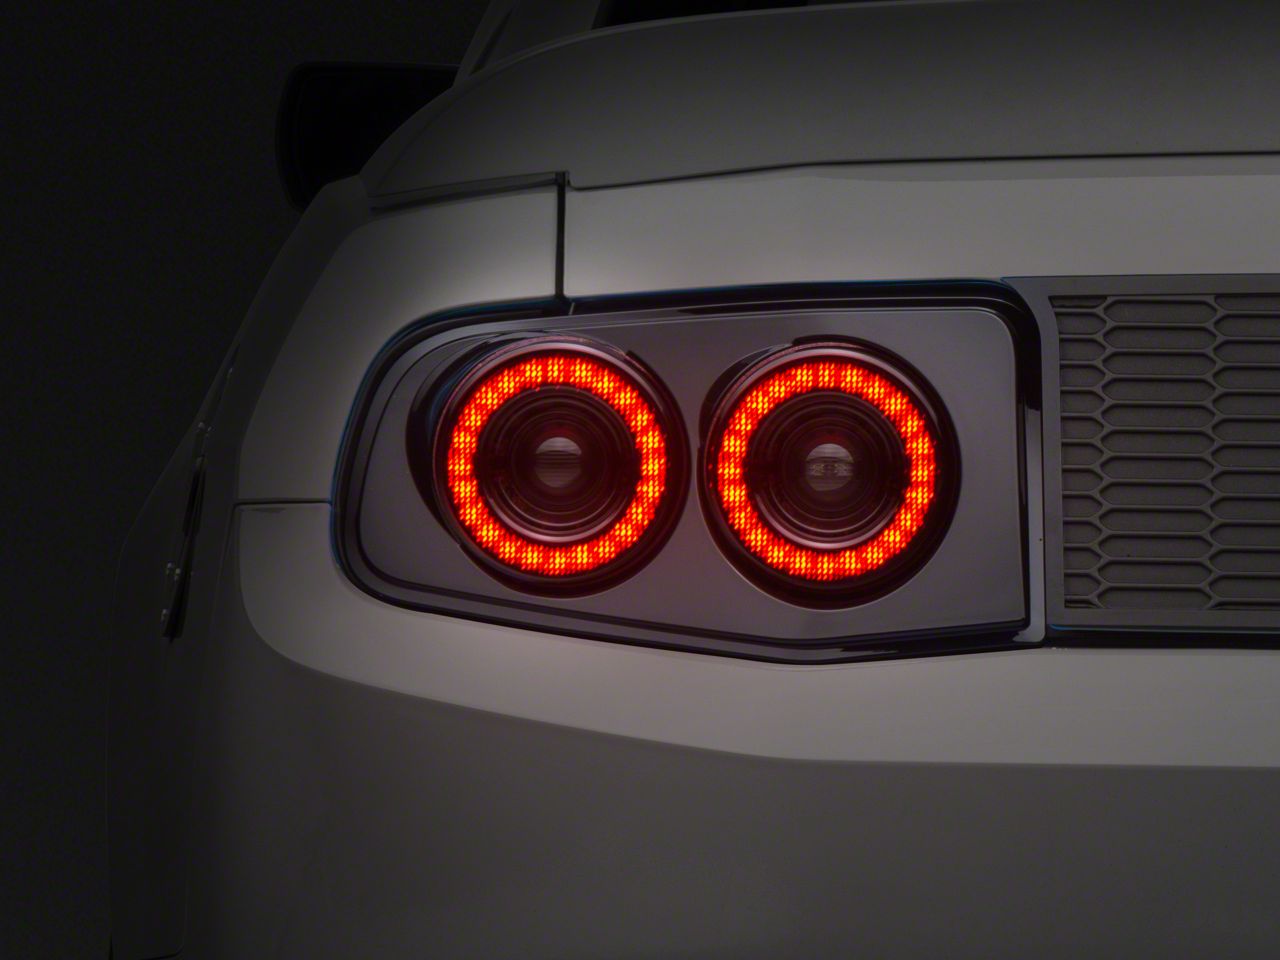 halo led lights for cars